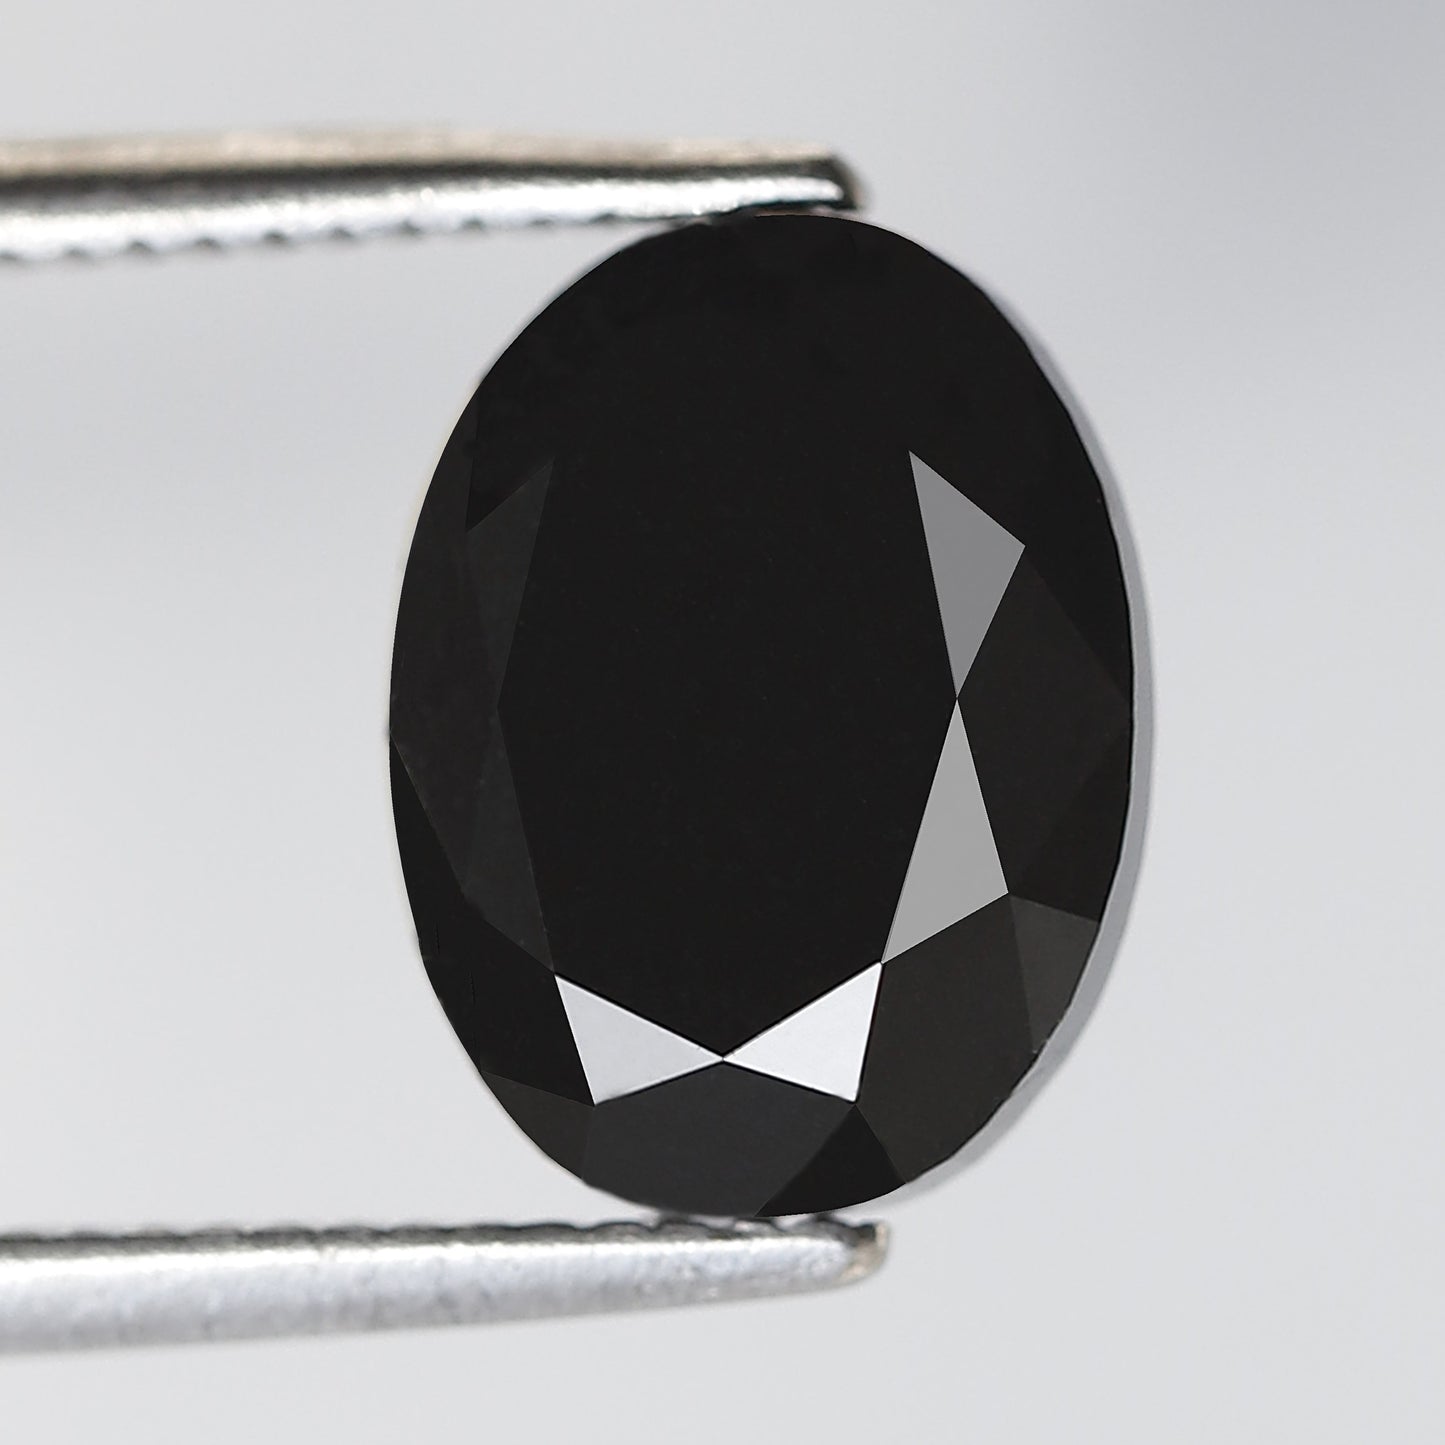 3 Carat Oval Cut Natural Loose Diamond 9 MM Black Diamond For Engagement Ring - Blackdiamond